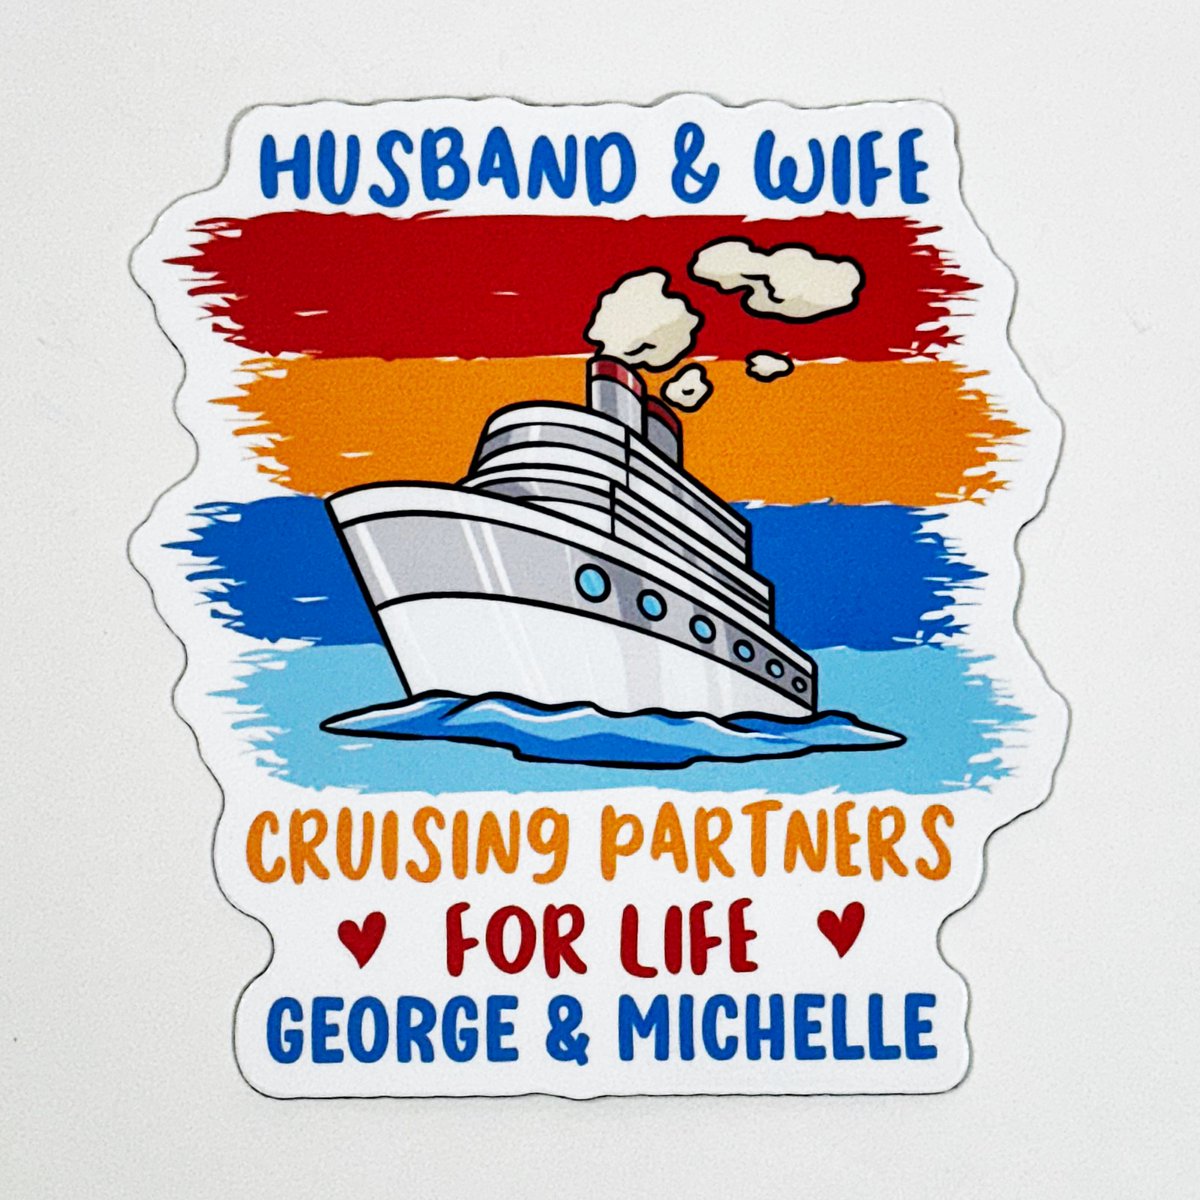 Husband & Wife Cruising Partners for Life Door Magnet Sign #husbandandwife #husbandwife #cruisingpartners #familycruise #carnival #cruiseships #cruisevacation #royalcaribbean #cruising #cruisingtogether amazon.com/dp/B0D3615ZPV etsy.me/44rrg0a via
@Etsy